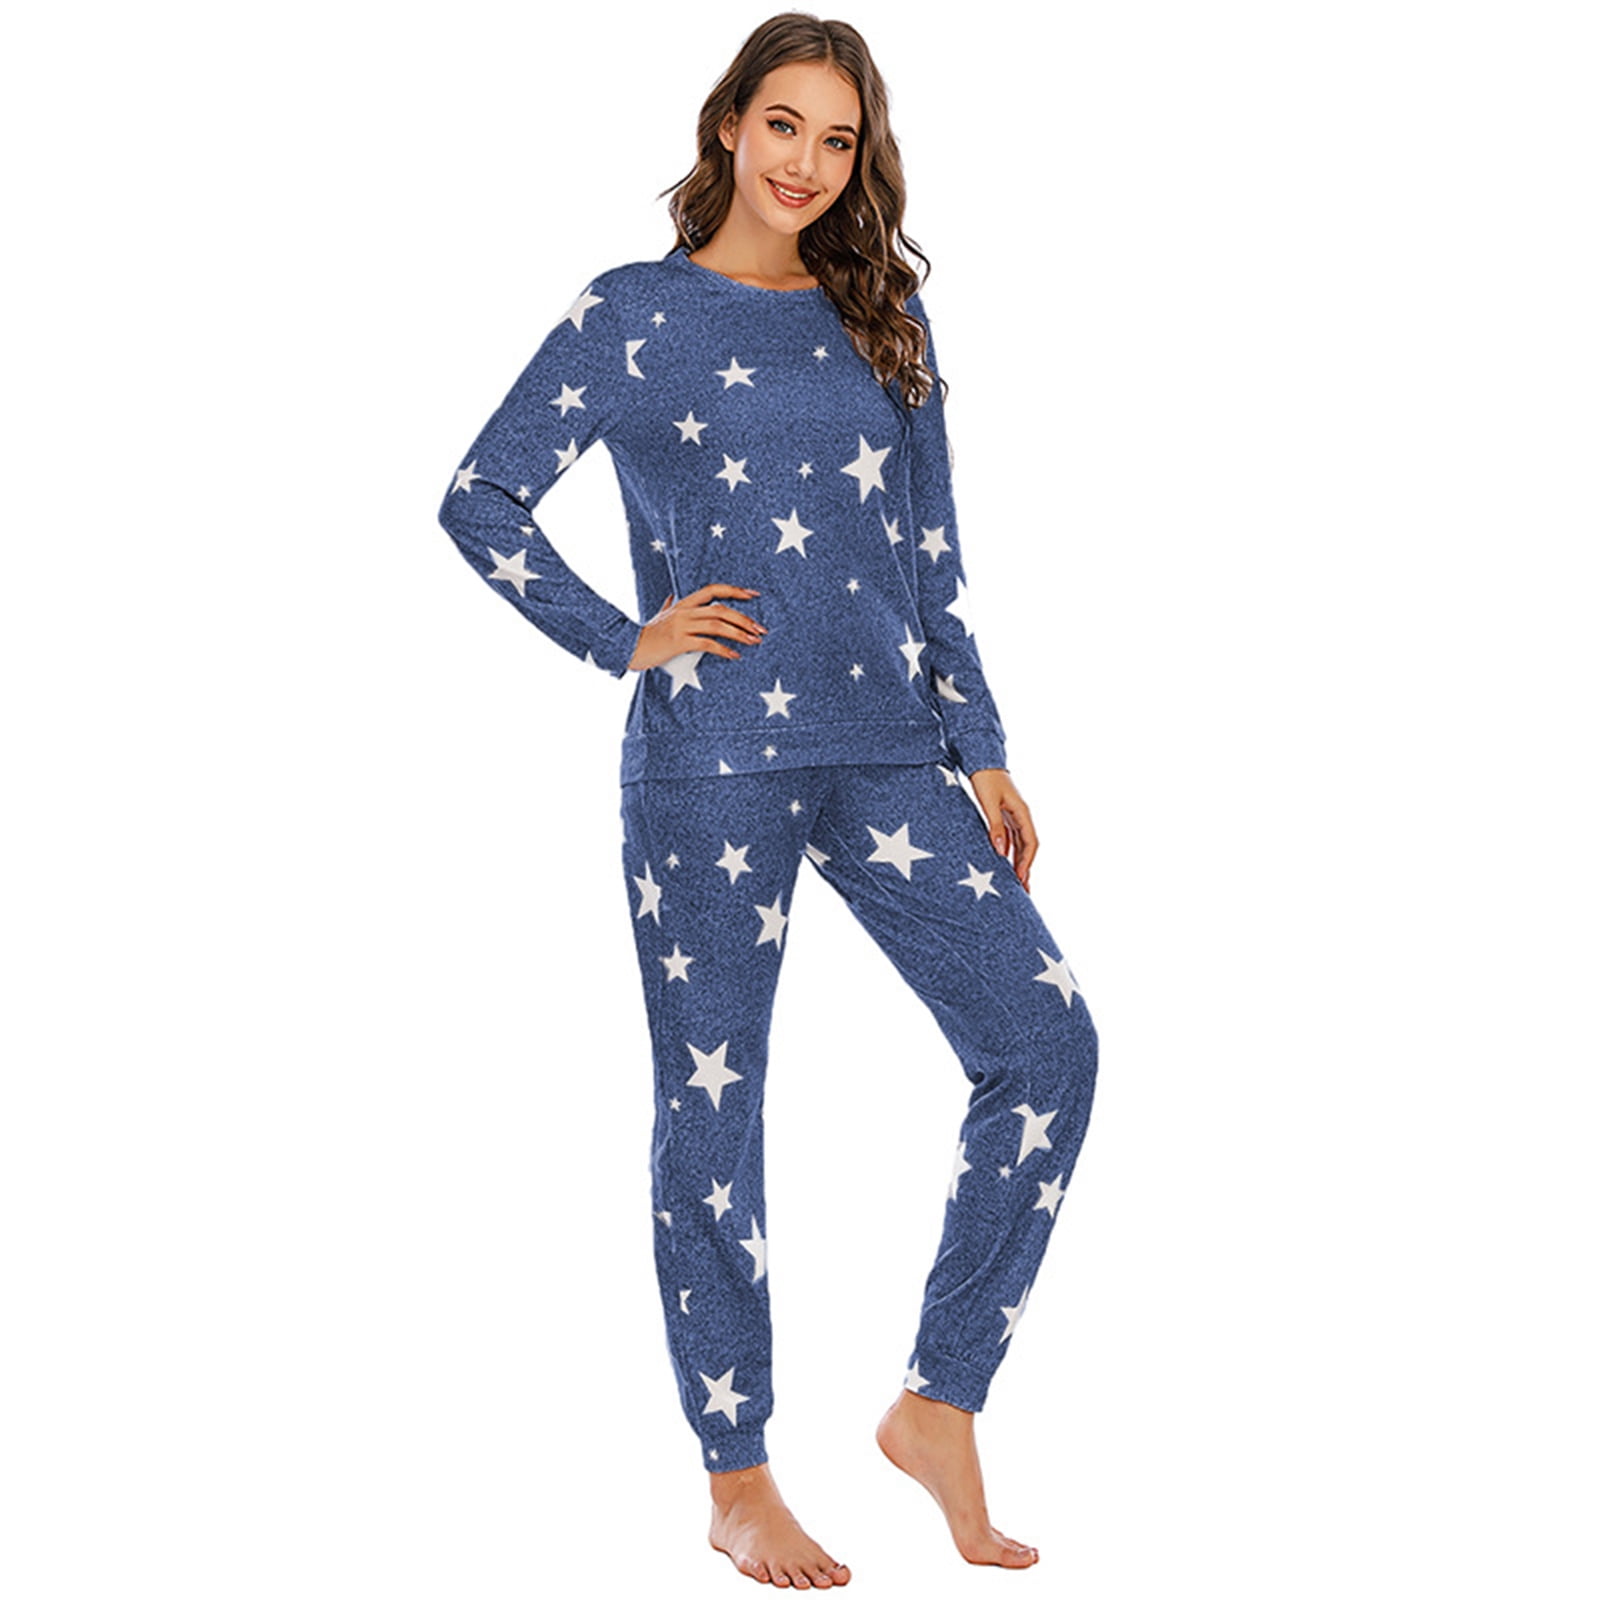 Spdoo Women S Pajama Set Long Sleeve Sleepwear Soft Loungewear Sets Pajamas Top And Pants Pjs S